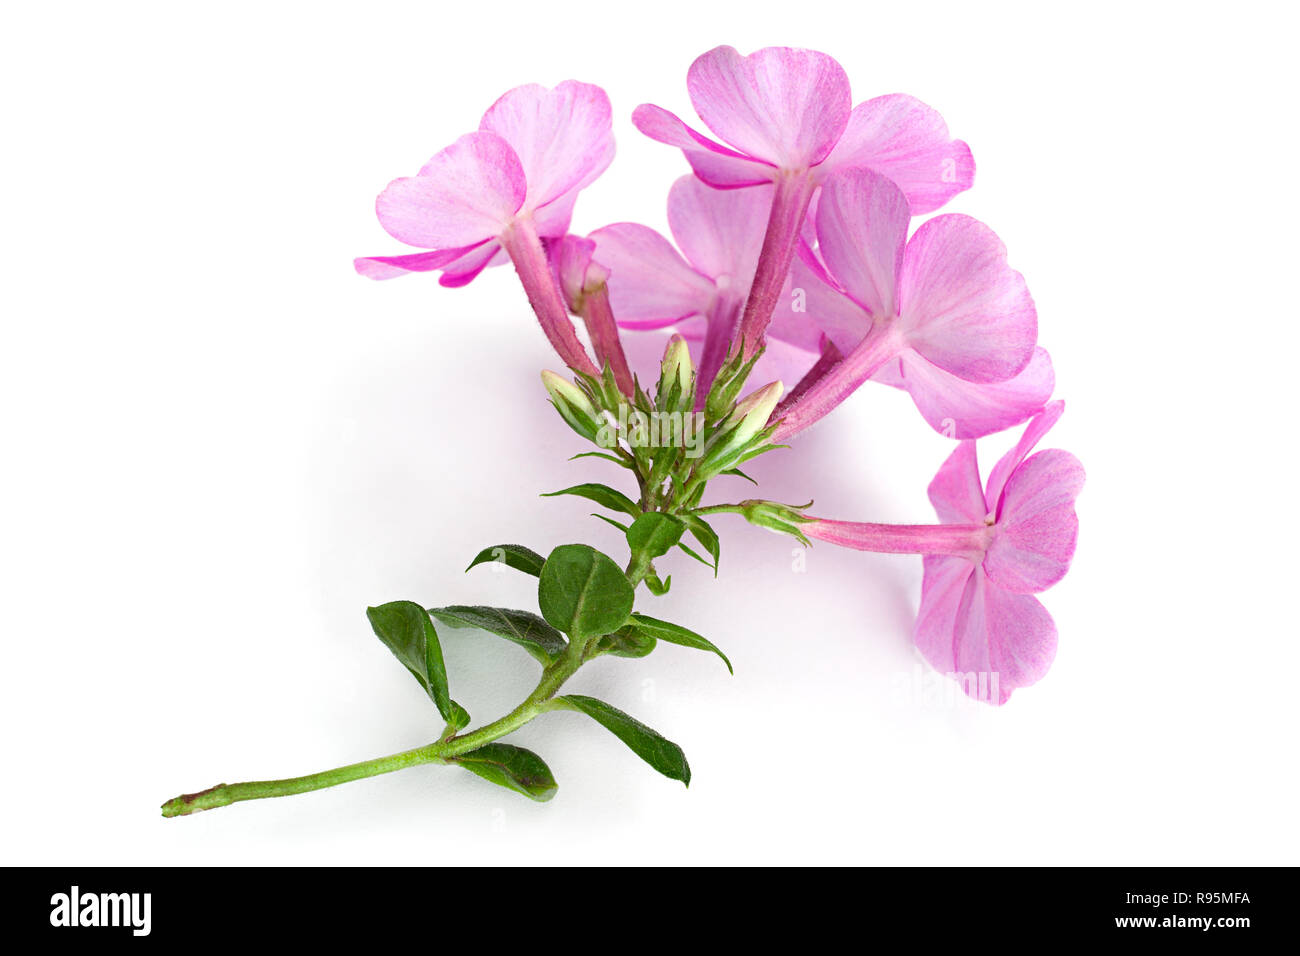 Phlox flower closeup isolated on white background Stock Photo